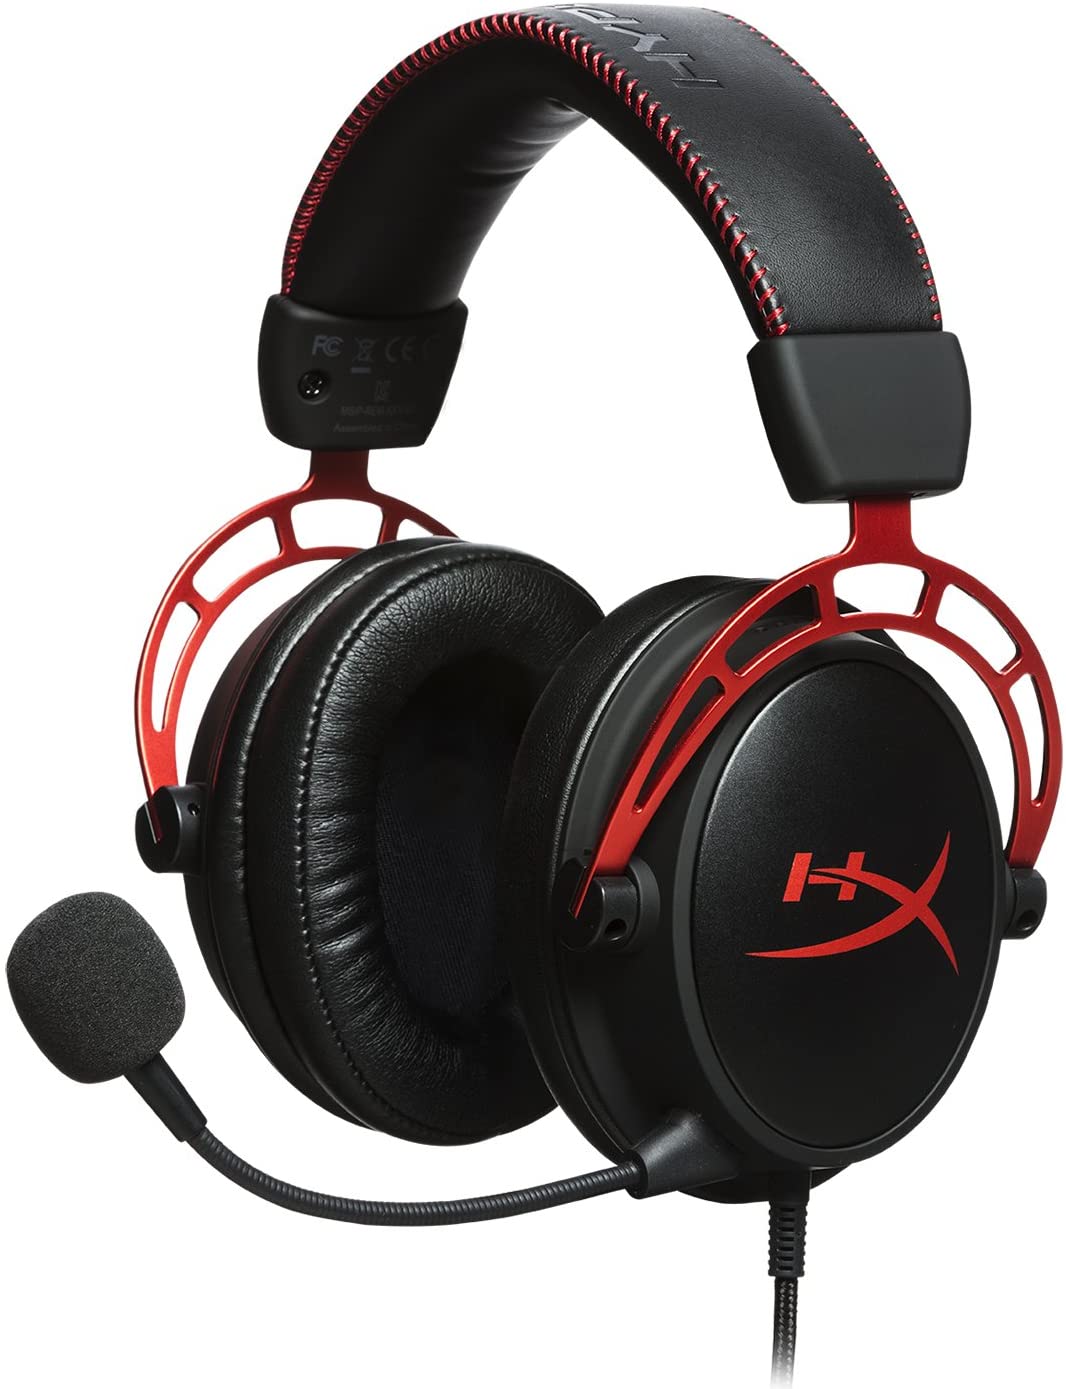 Best headphones for gaming - HyperX Cloud Alpha